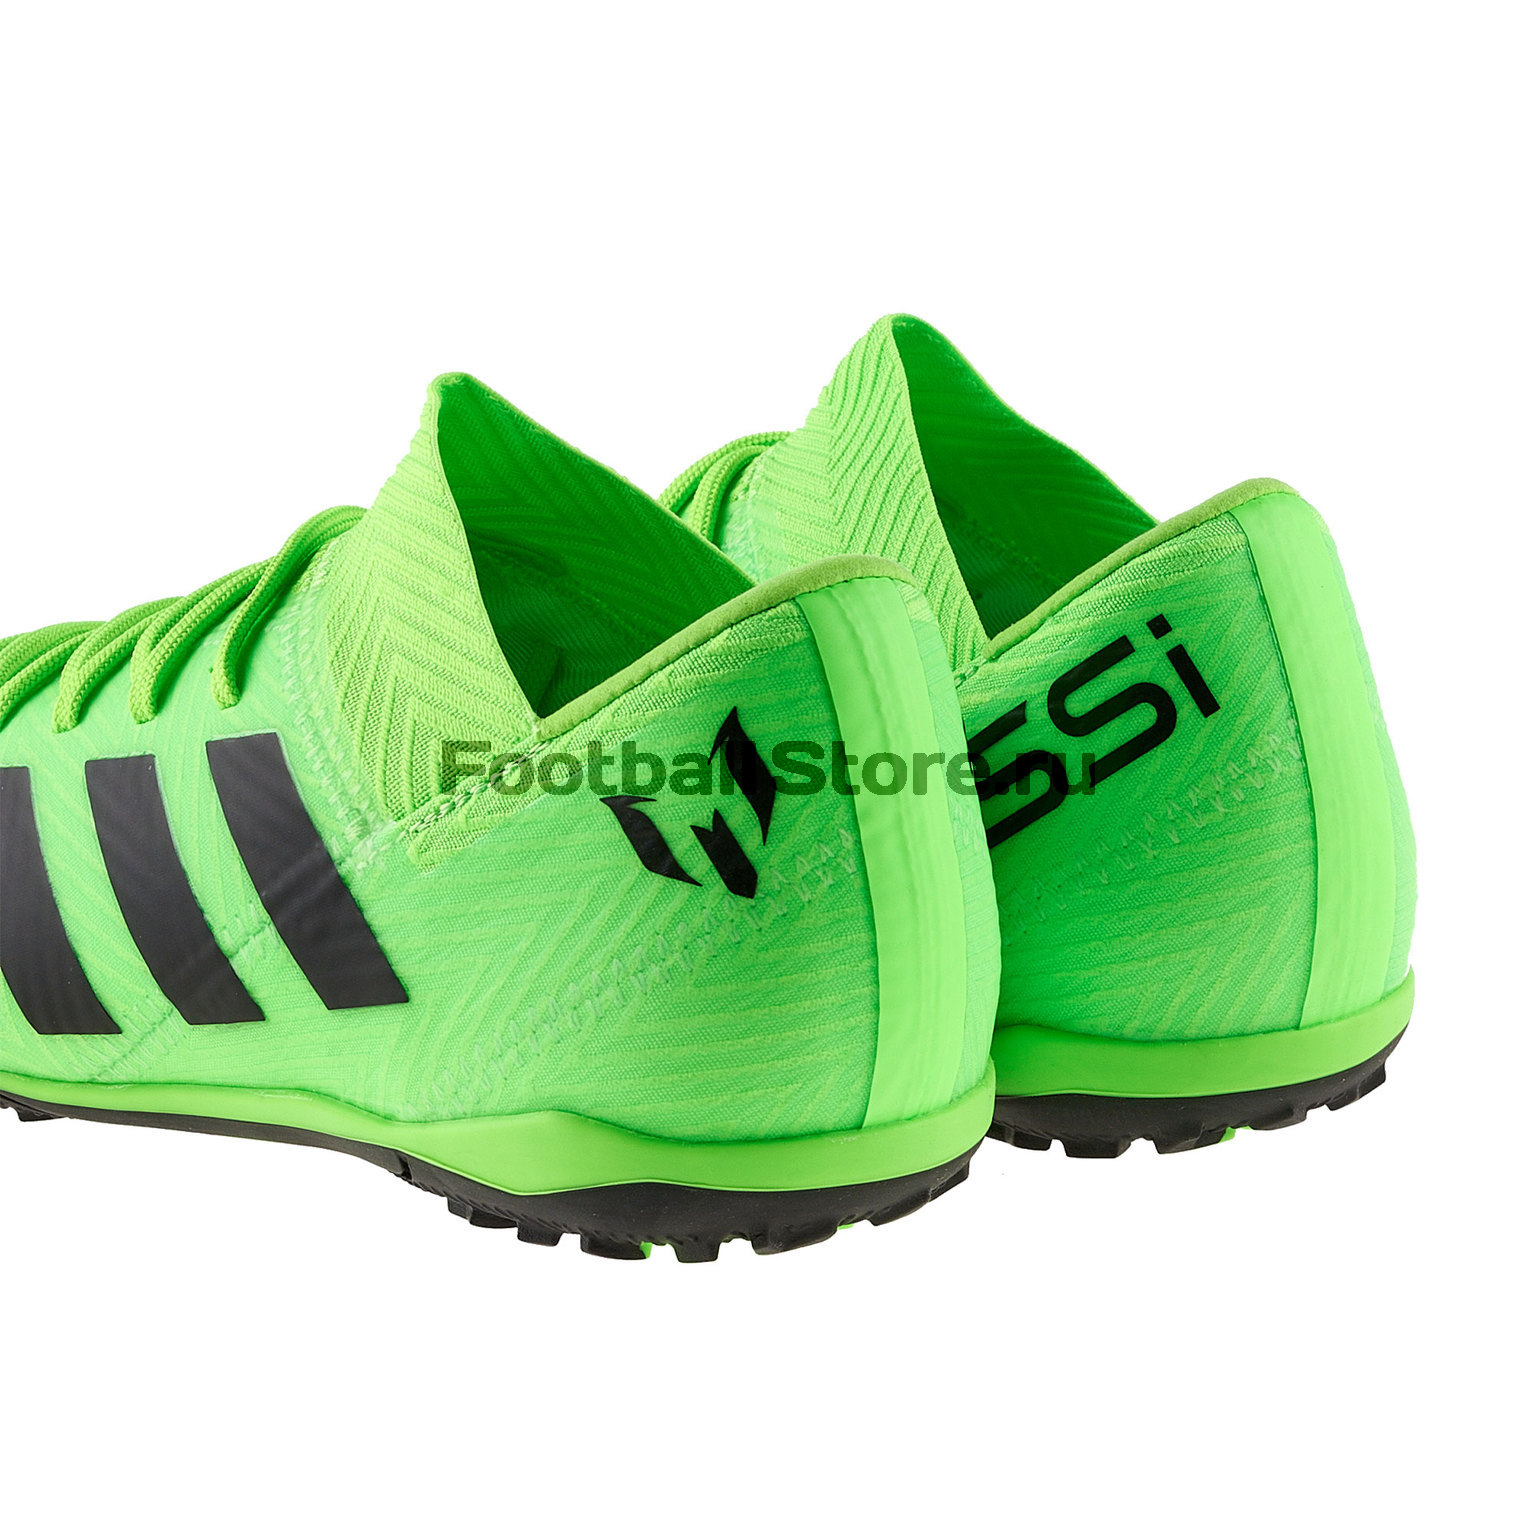 Шиповки детские Adidas Nemeziz Messi Tango 18.3 TF DB2394